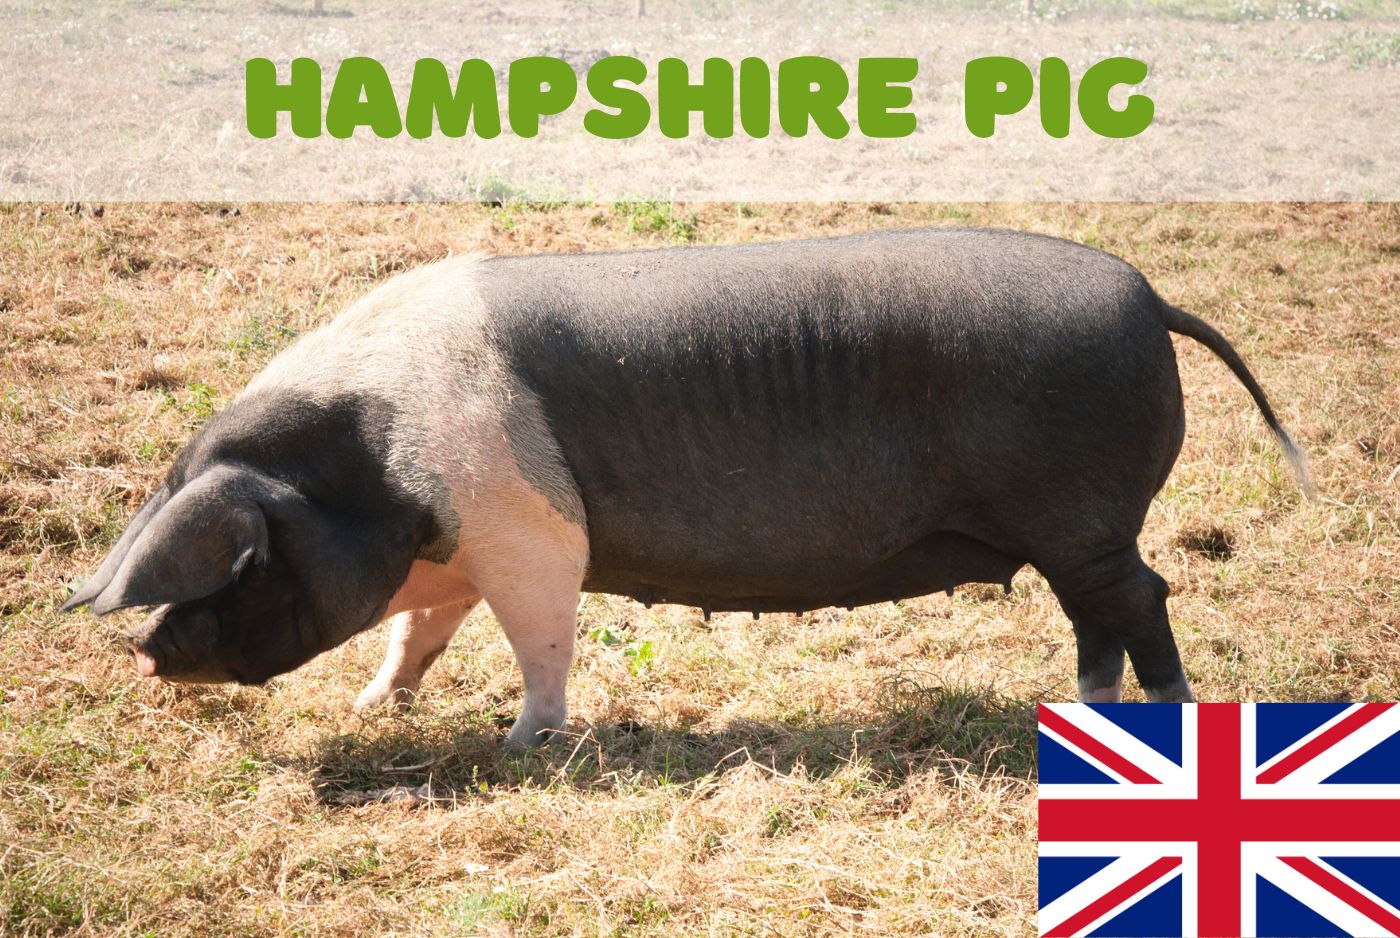 Hampshire pig